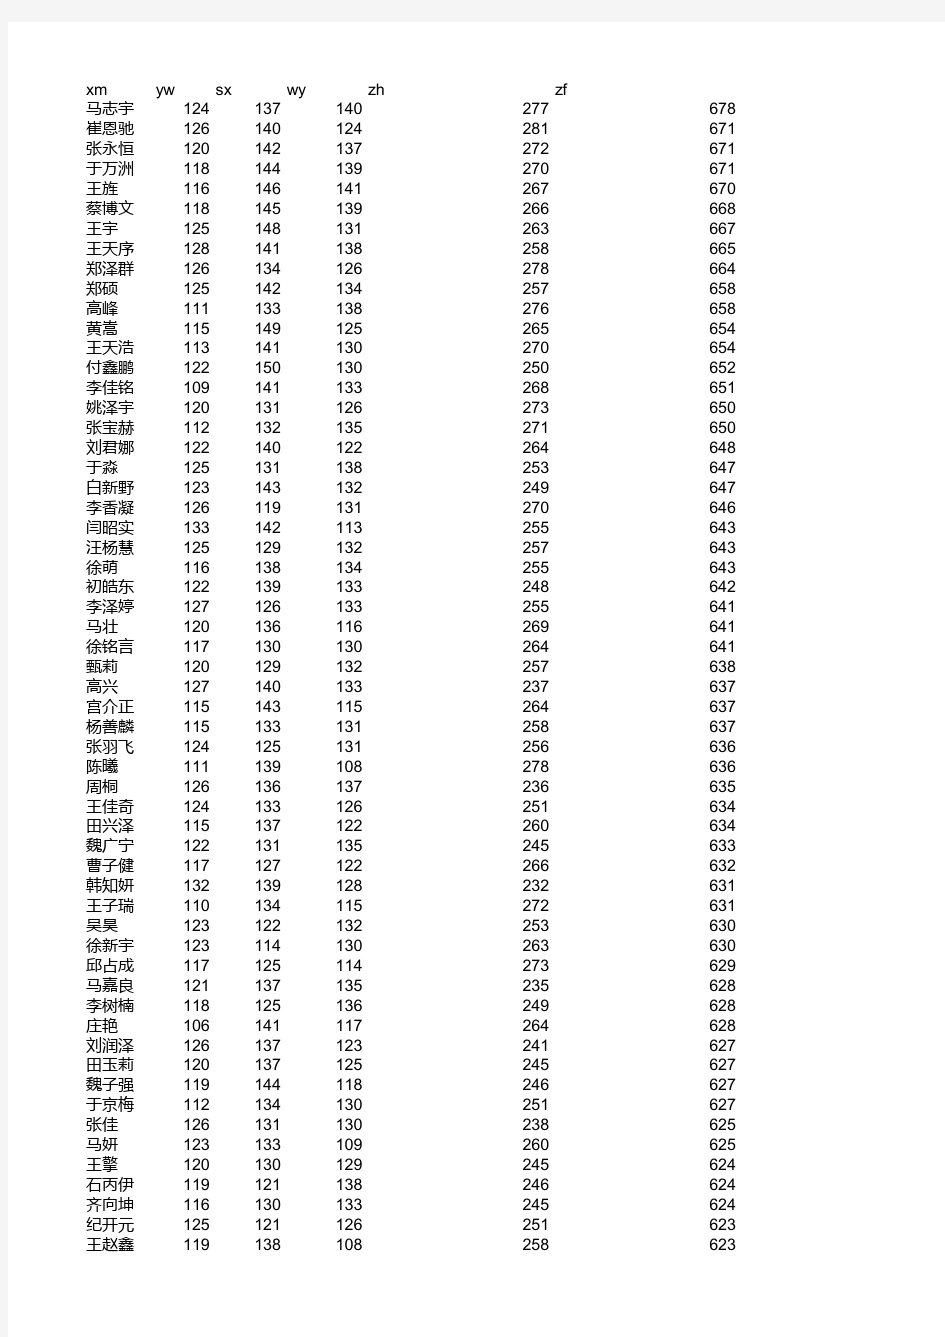 2013高考成绩111 - 副本(1)